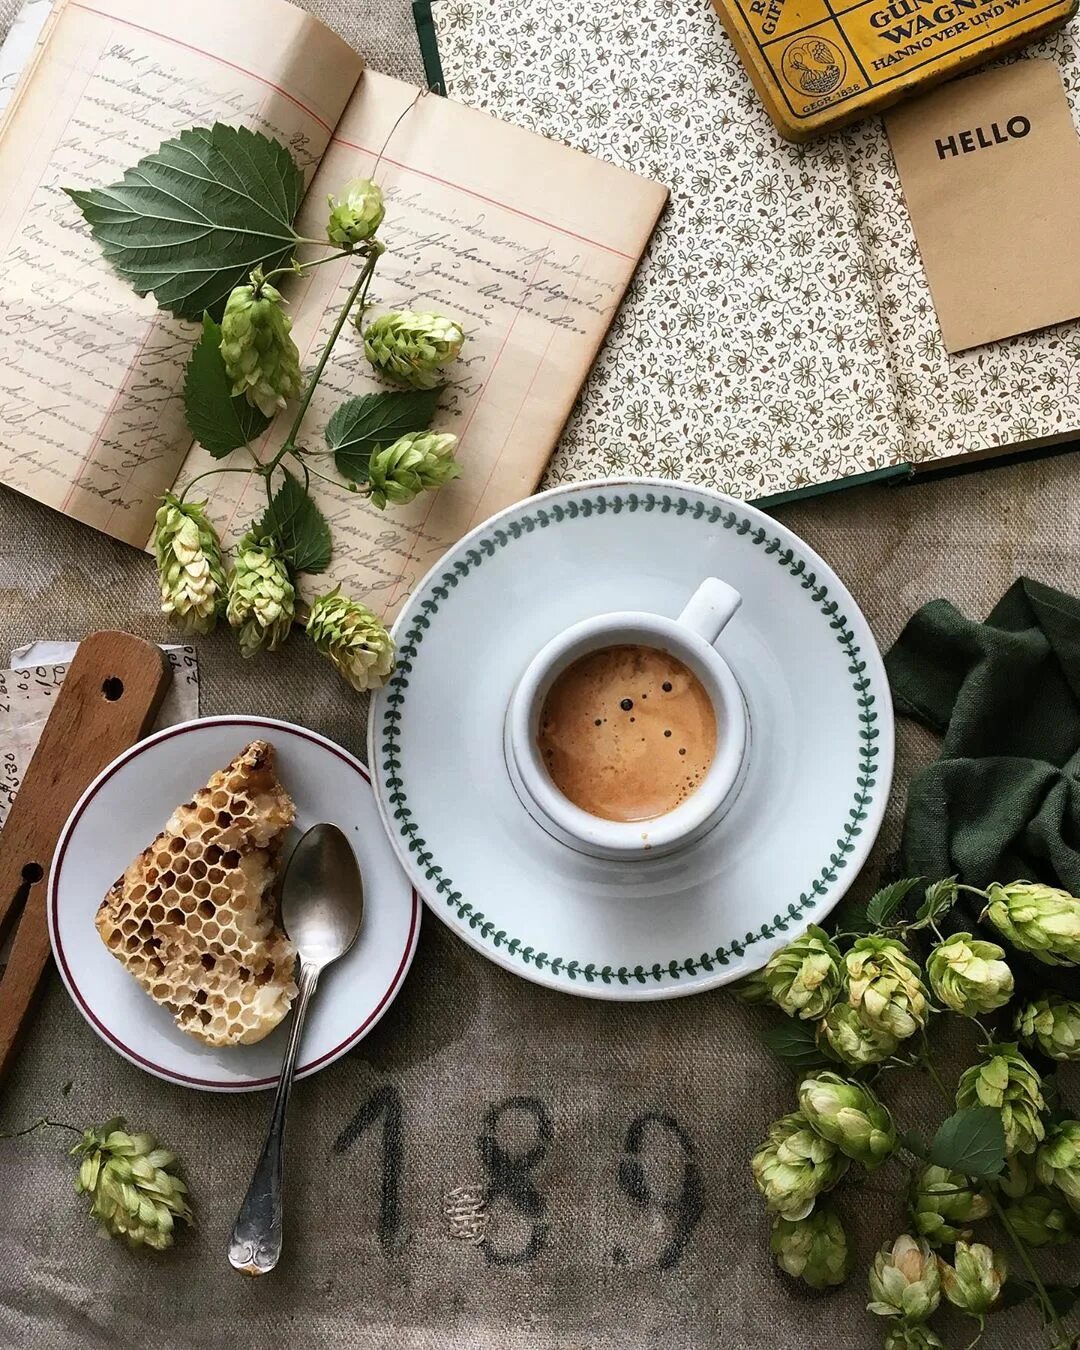 Coffee & slow life в Instagram: "Hump day coffee with gourmet raw ...